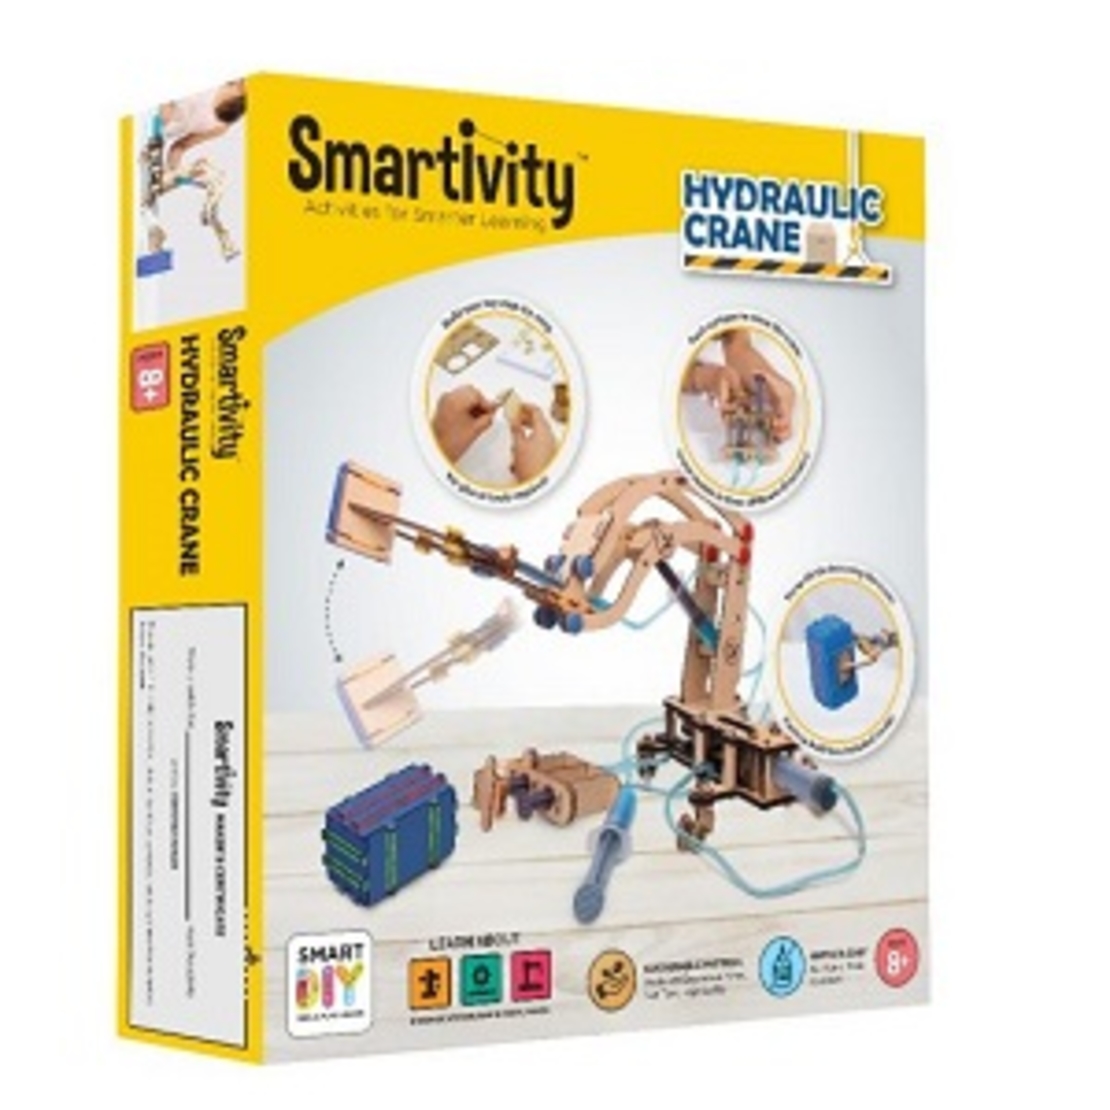 Smartivity - Hydraulic Crane SMRT1018